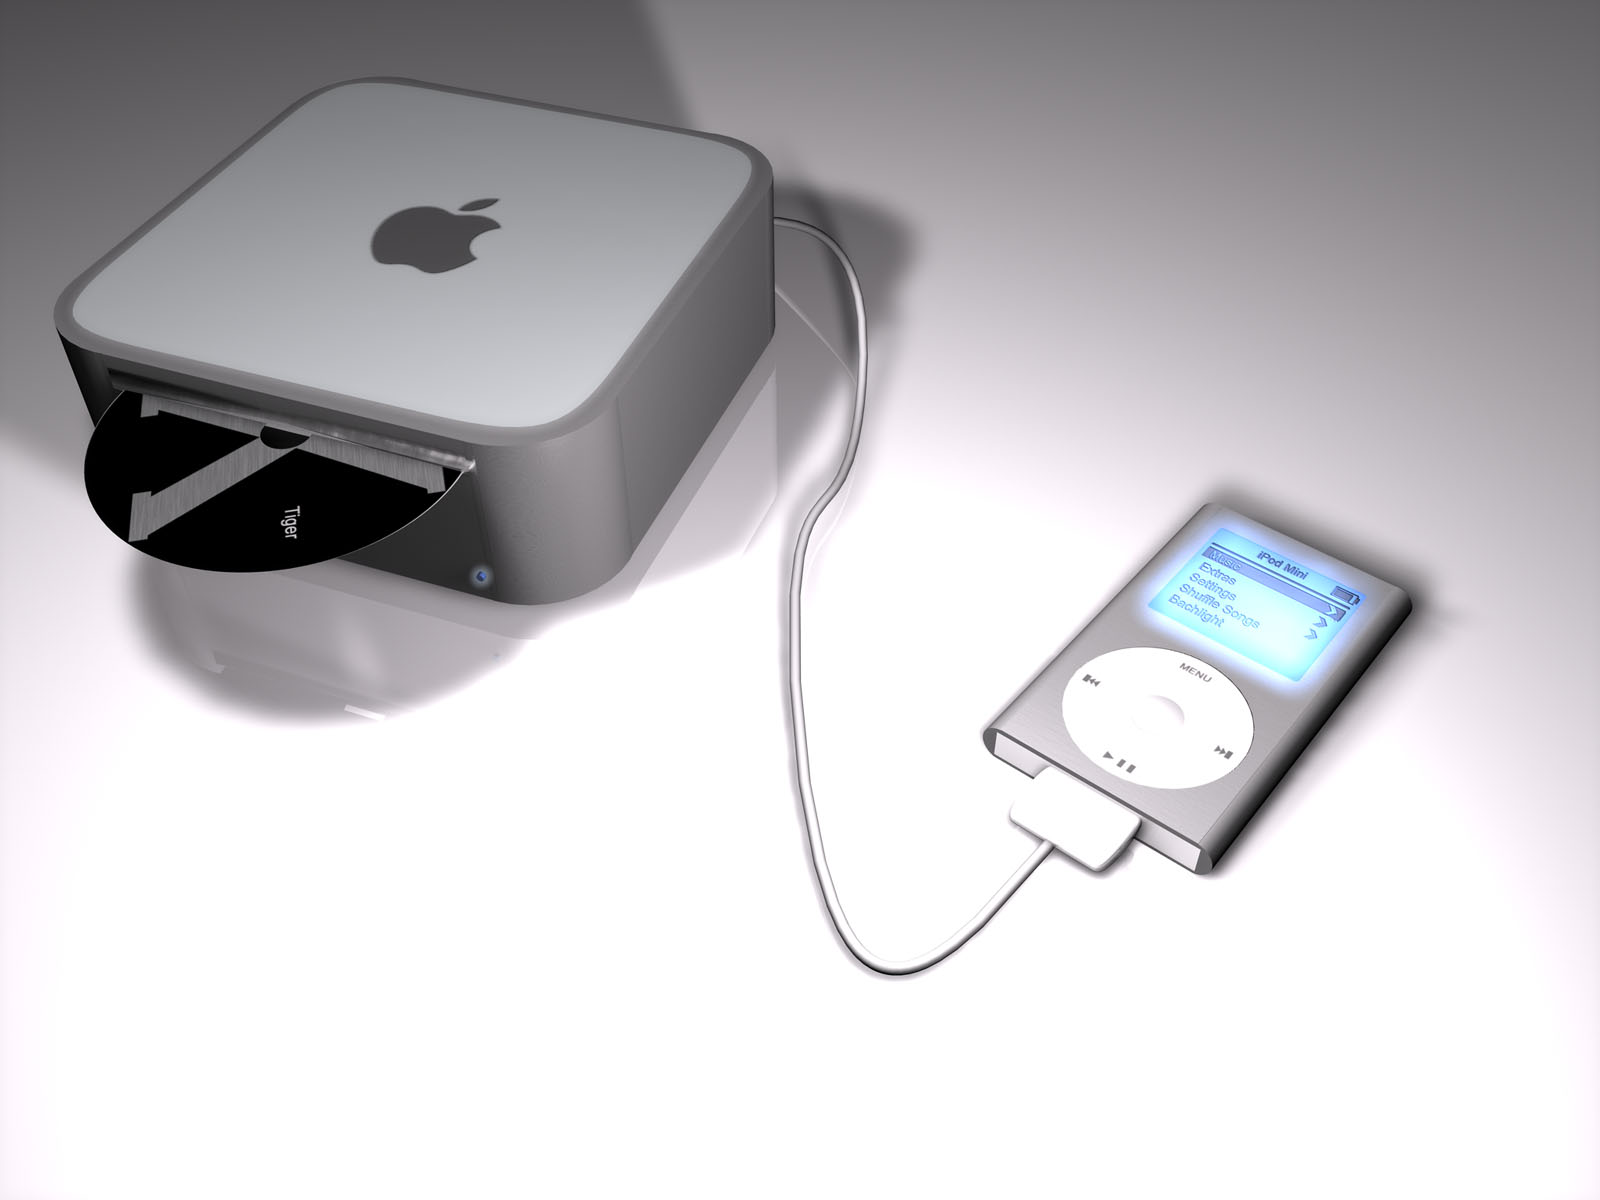 Puters Mac Os X Tiger On Mini And Ipod